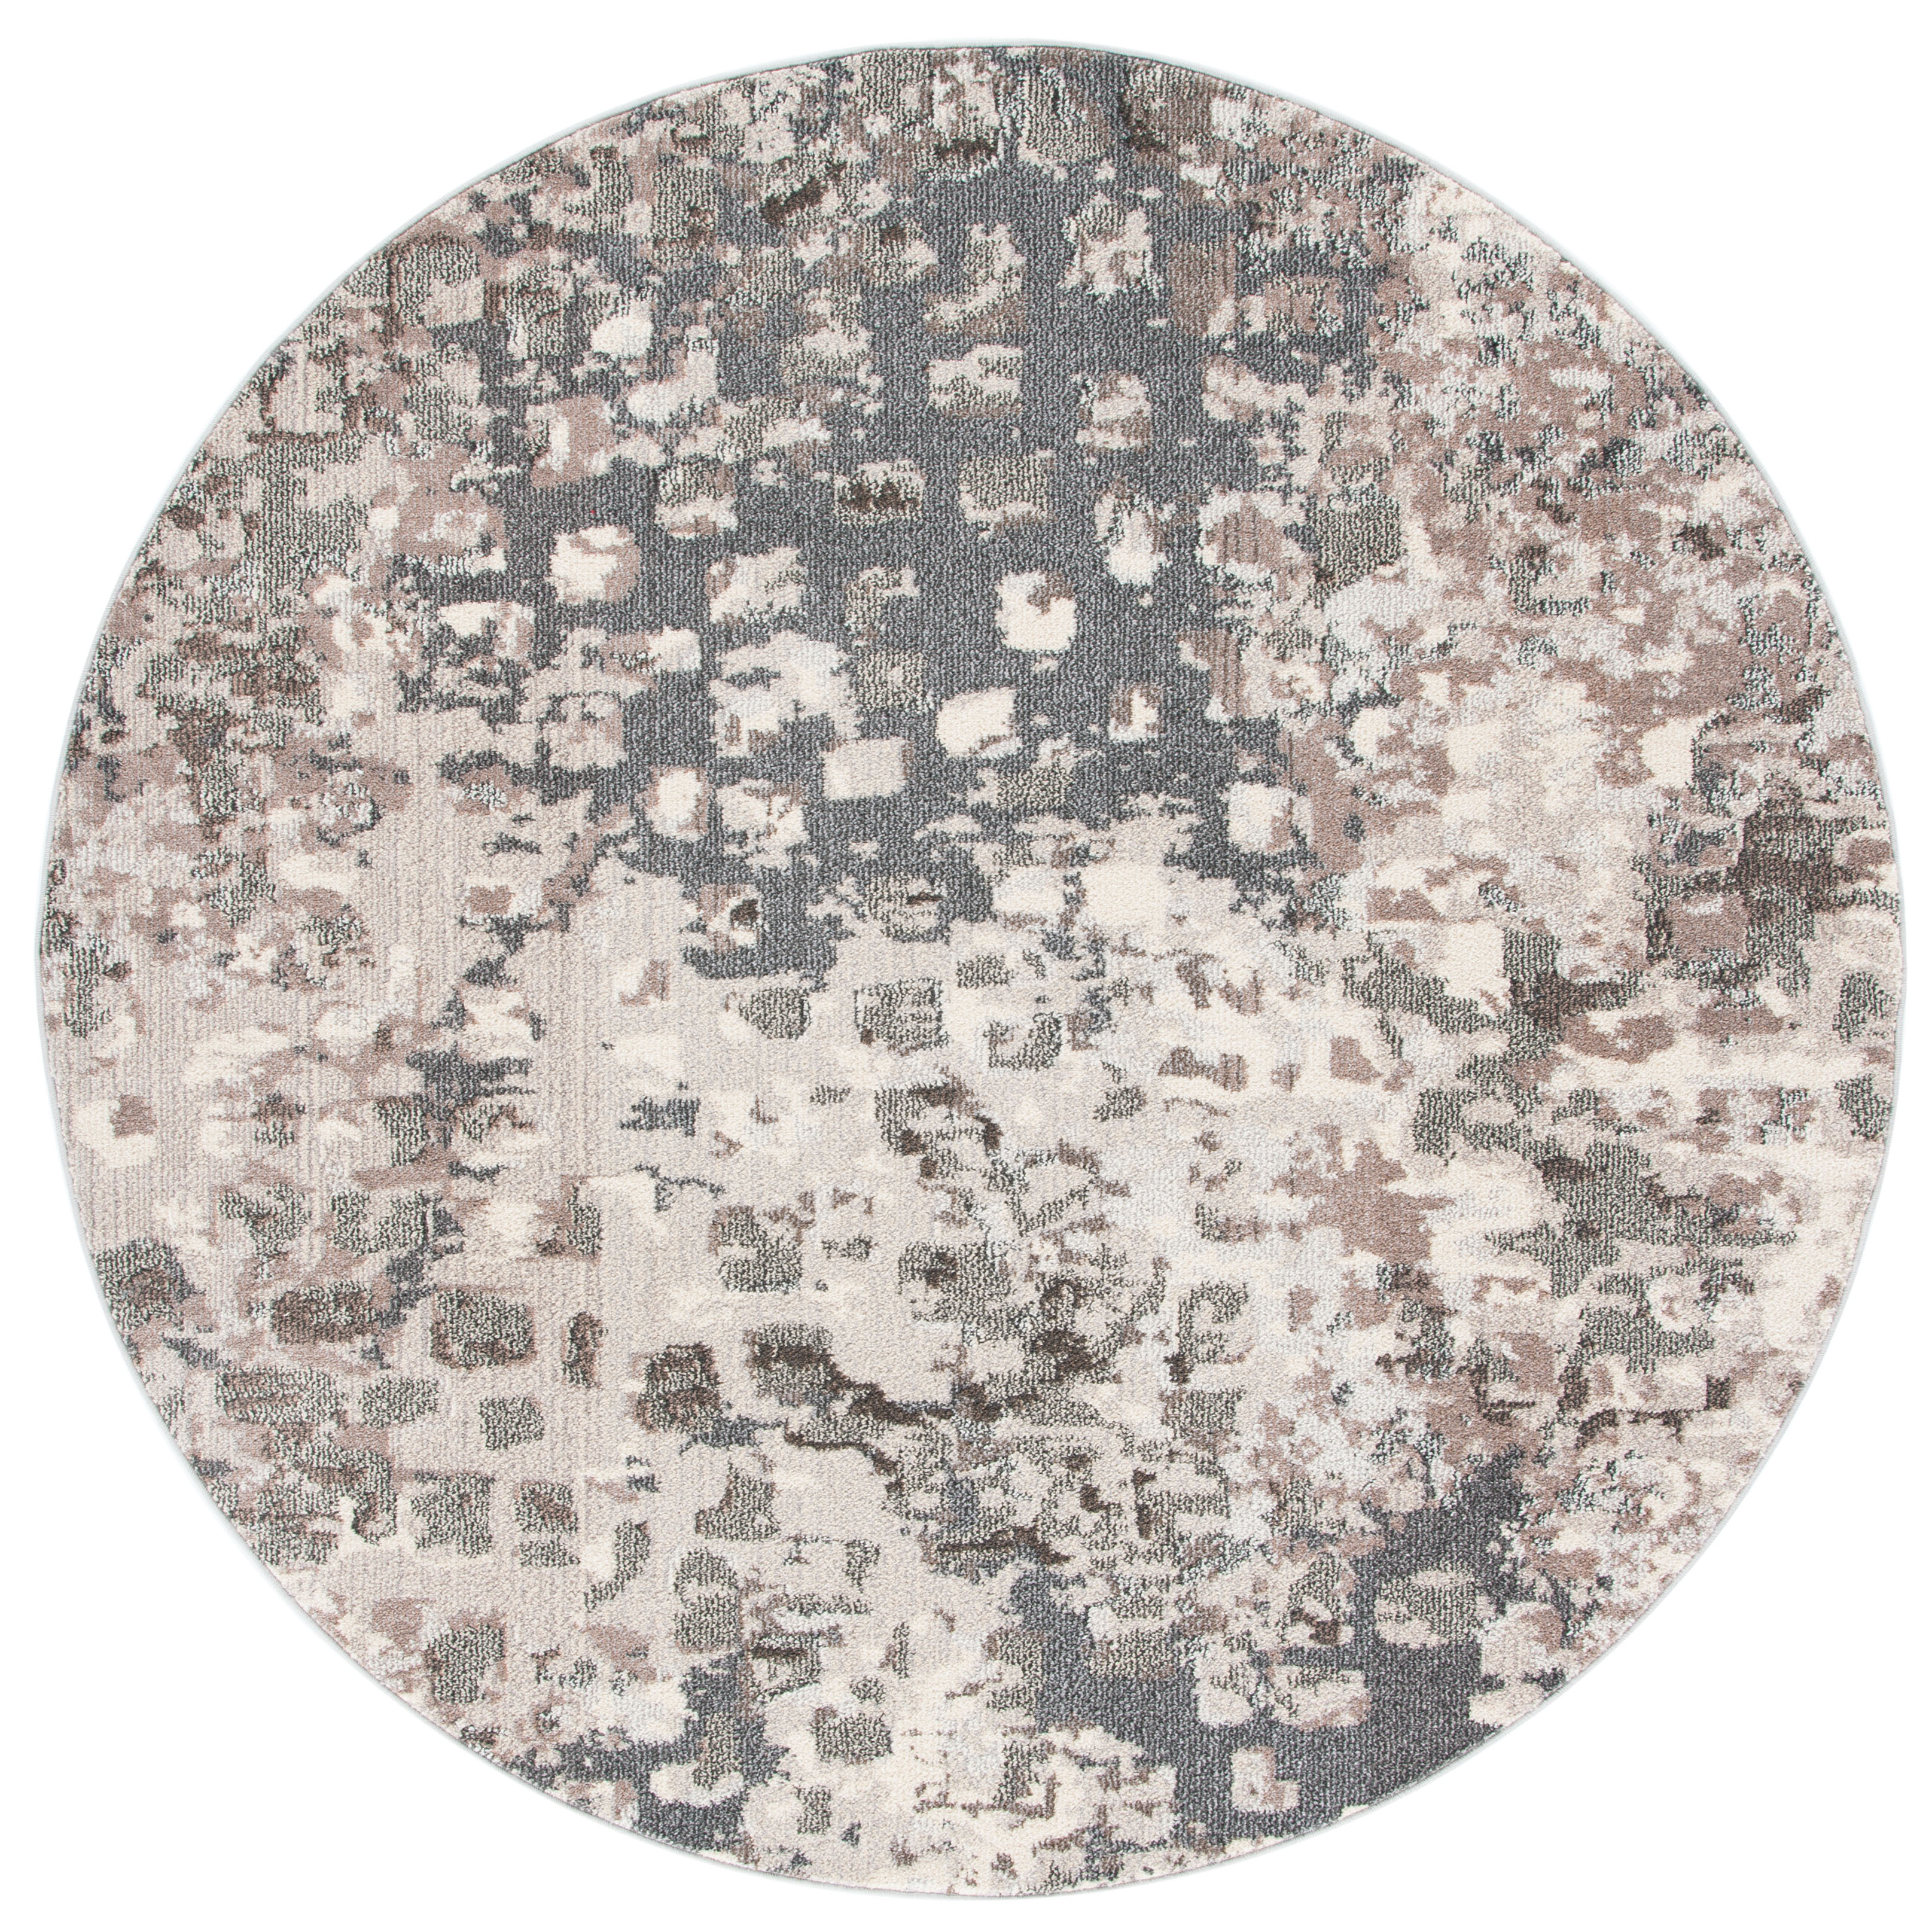 SAFAVIEH Madison Candelario Abstract Polka Dots Area Rug, Grey/Beige, 6'7" x 6'7" Round - image 1 of 8